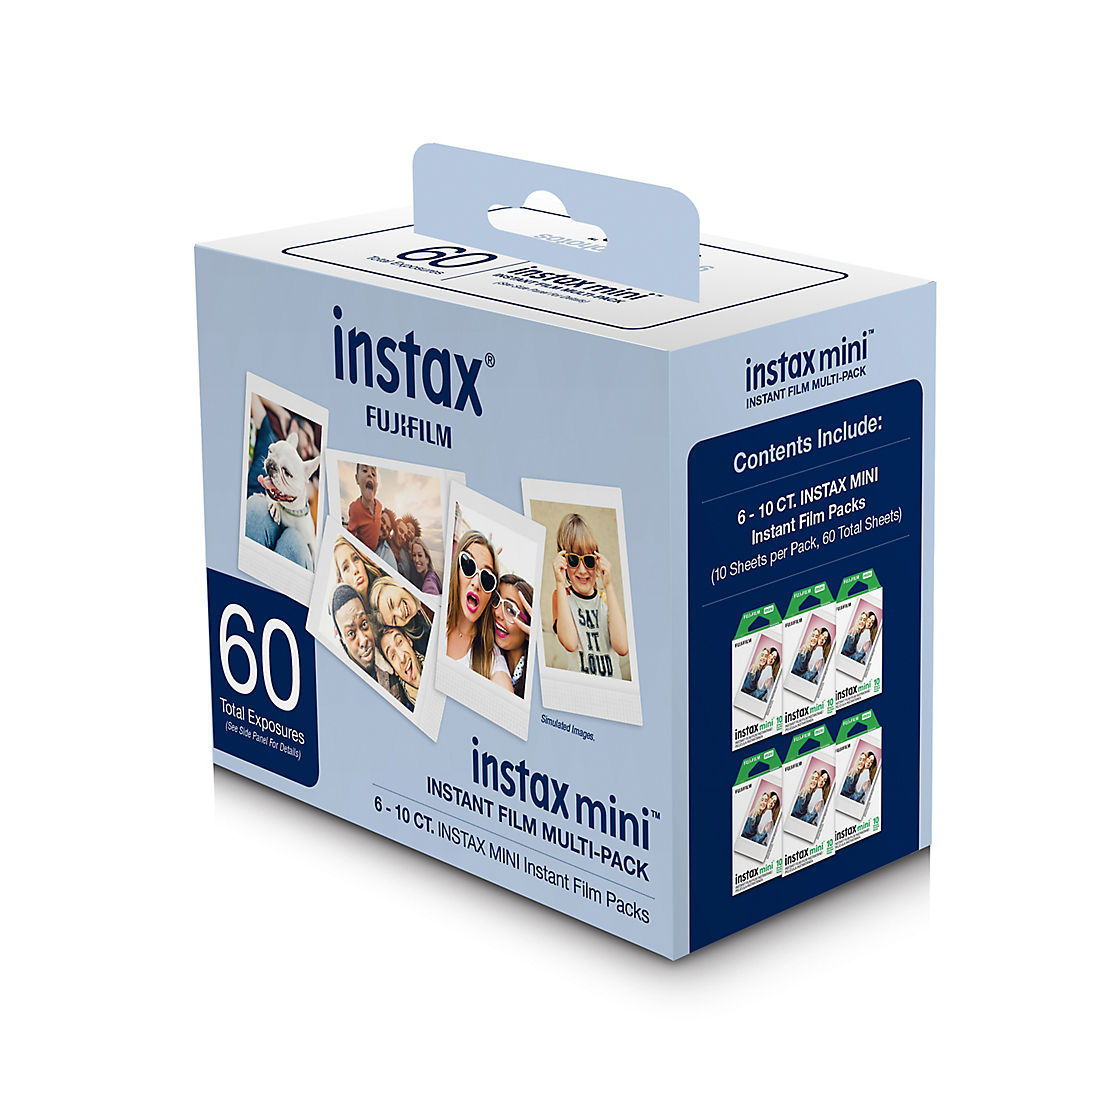 INSTAX MINI™ Instant Contact Sheet Film